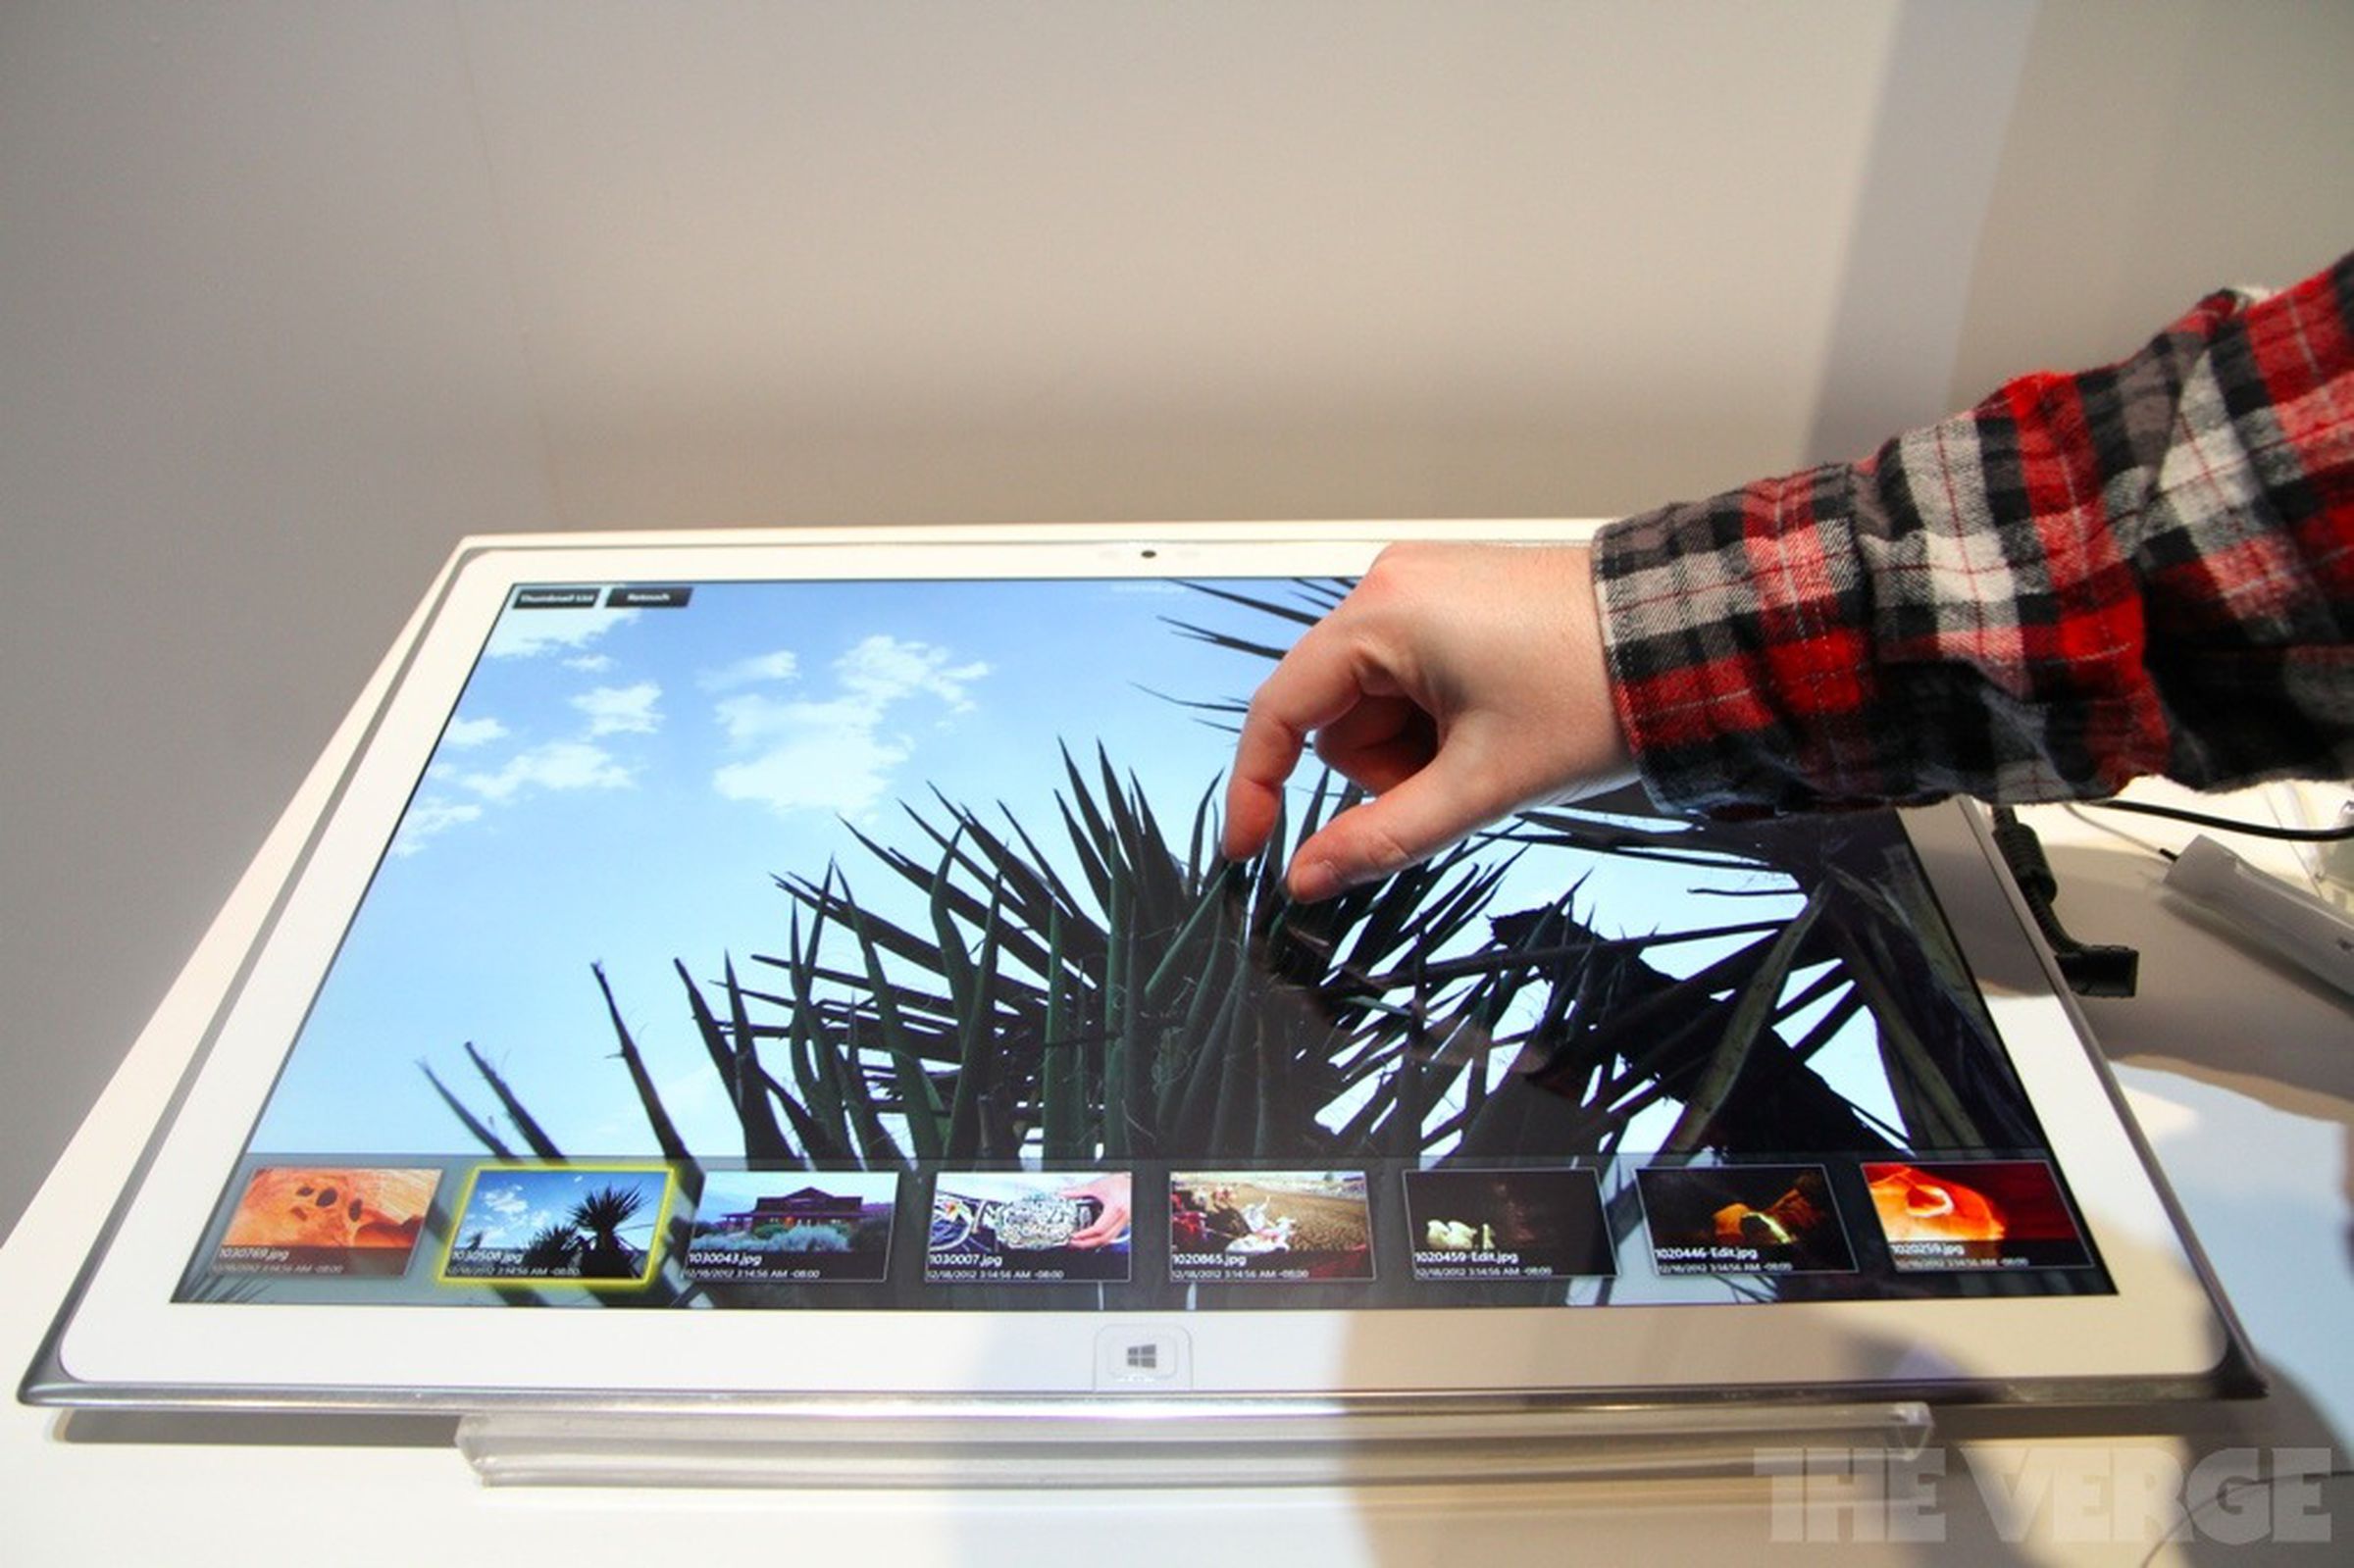 Panasonic 4K Windows 8 tablet hands-on photos